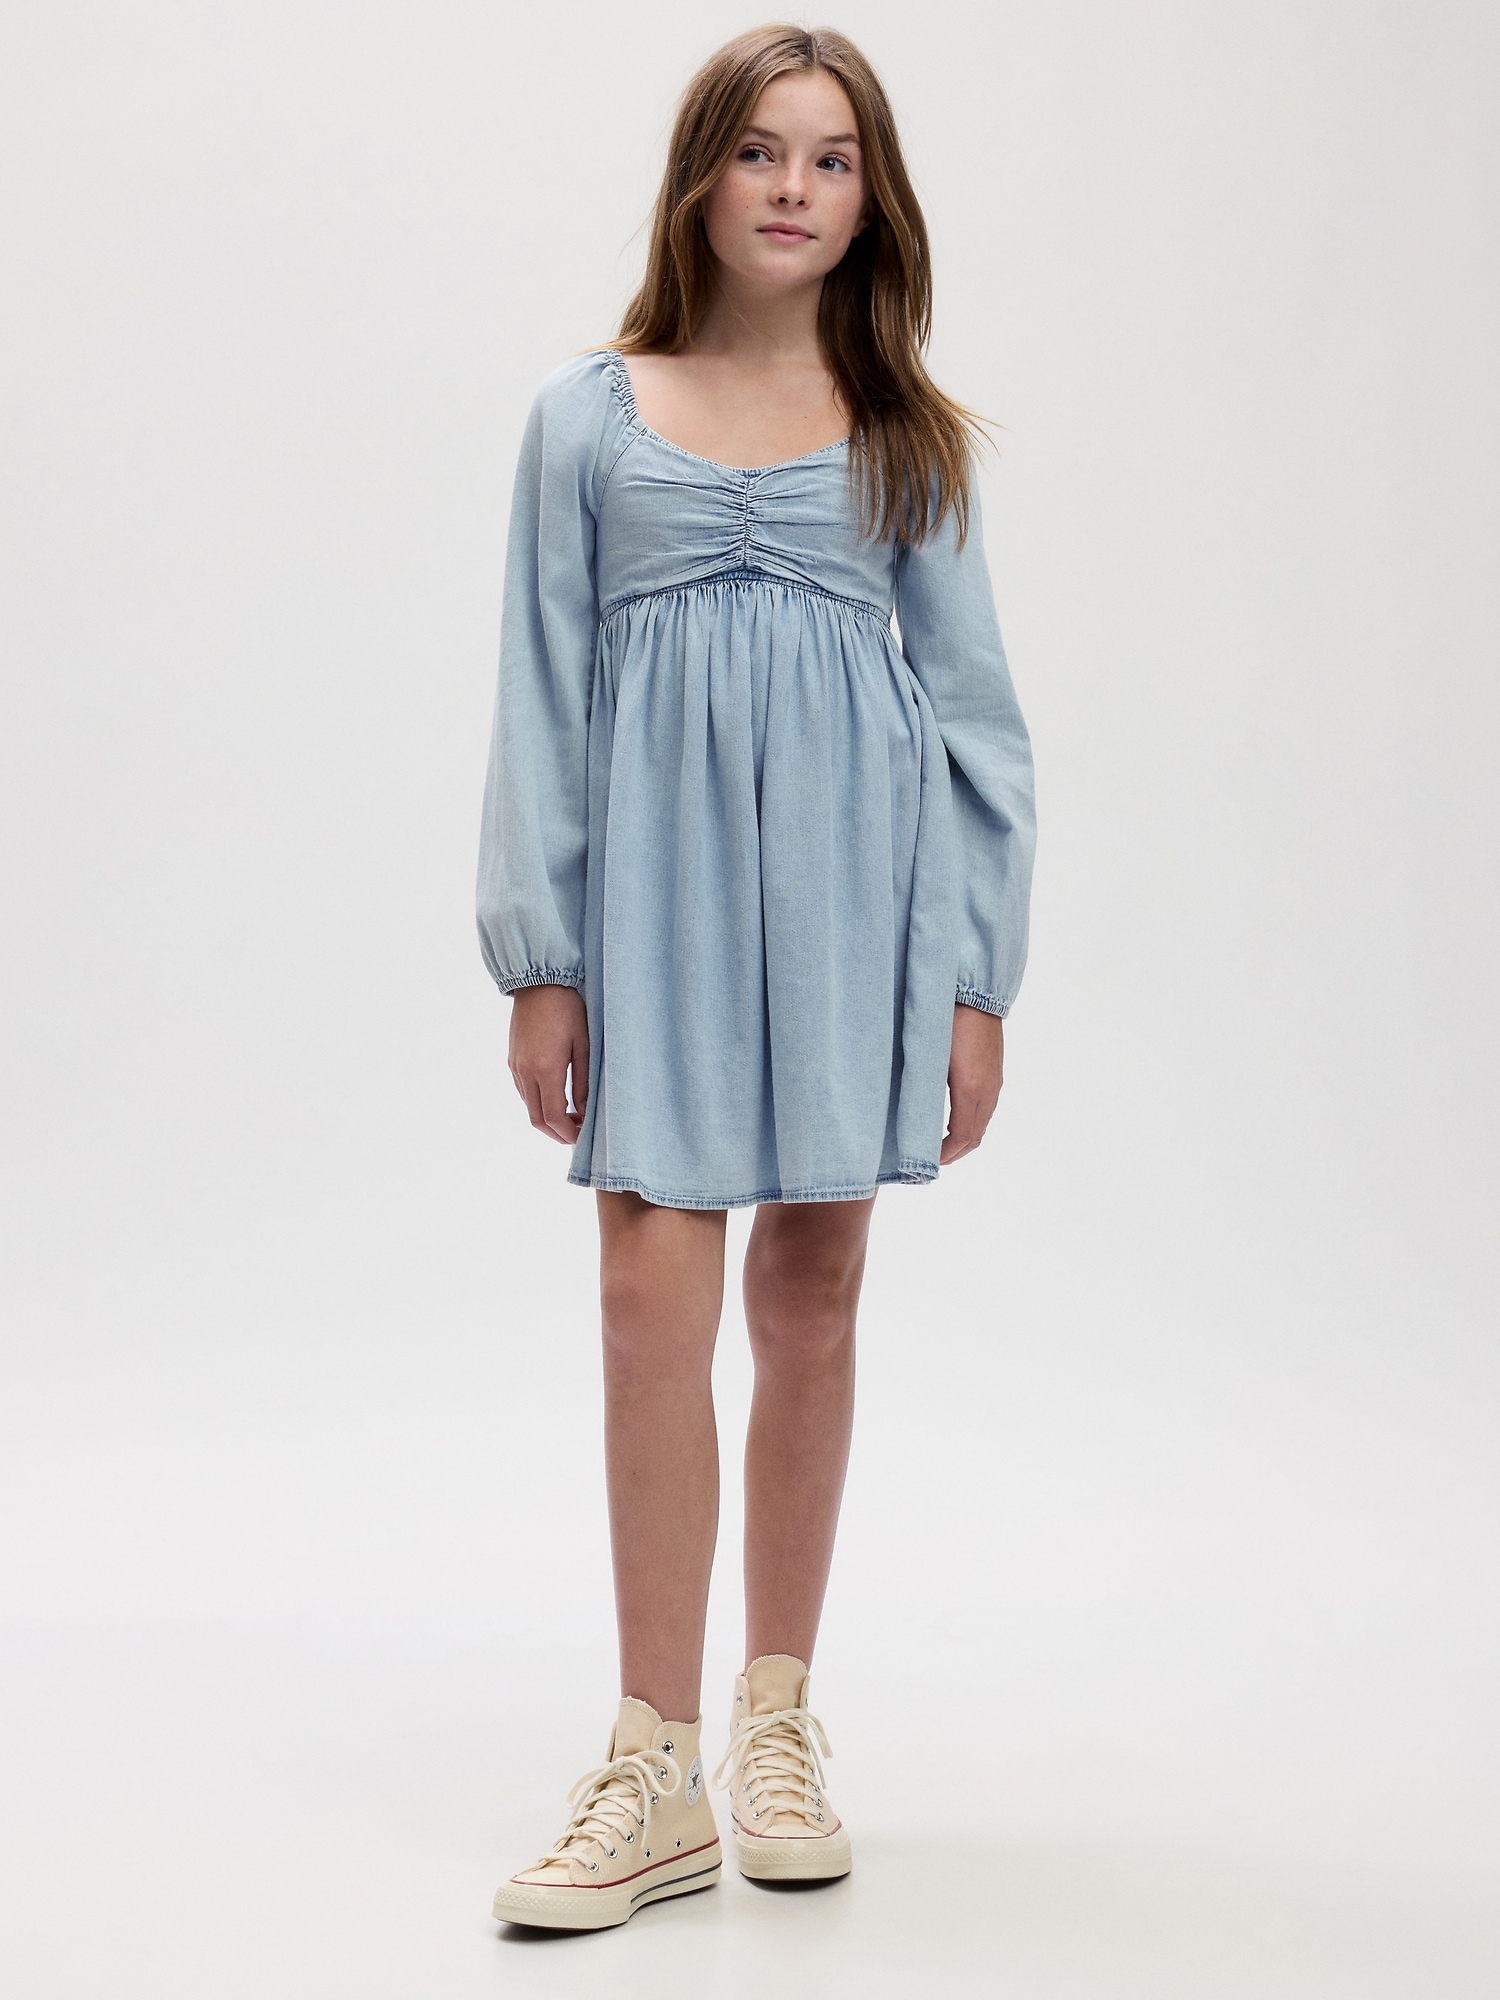 Kids Ruched Denim Dress | Gap